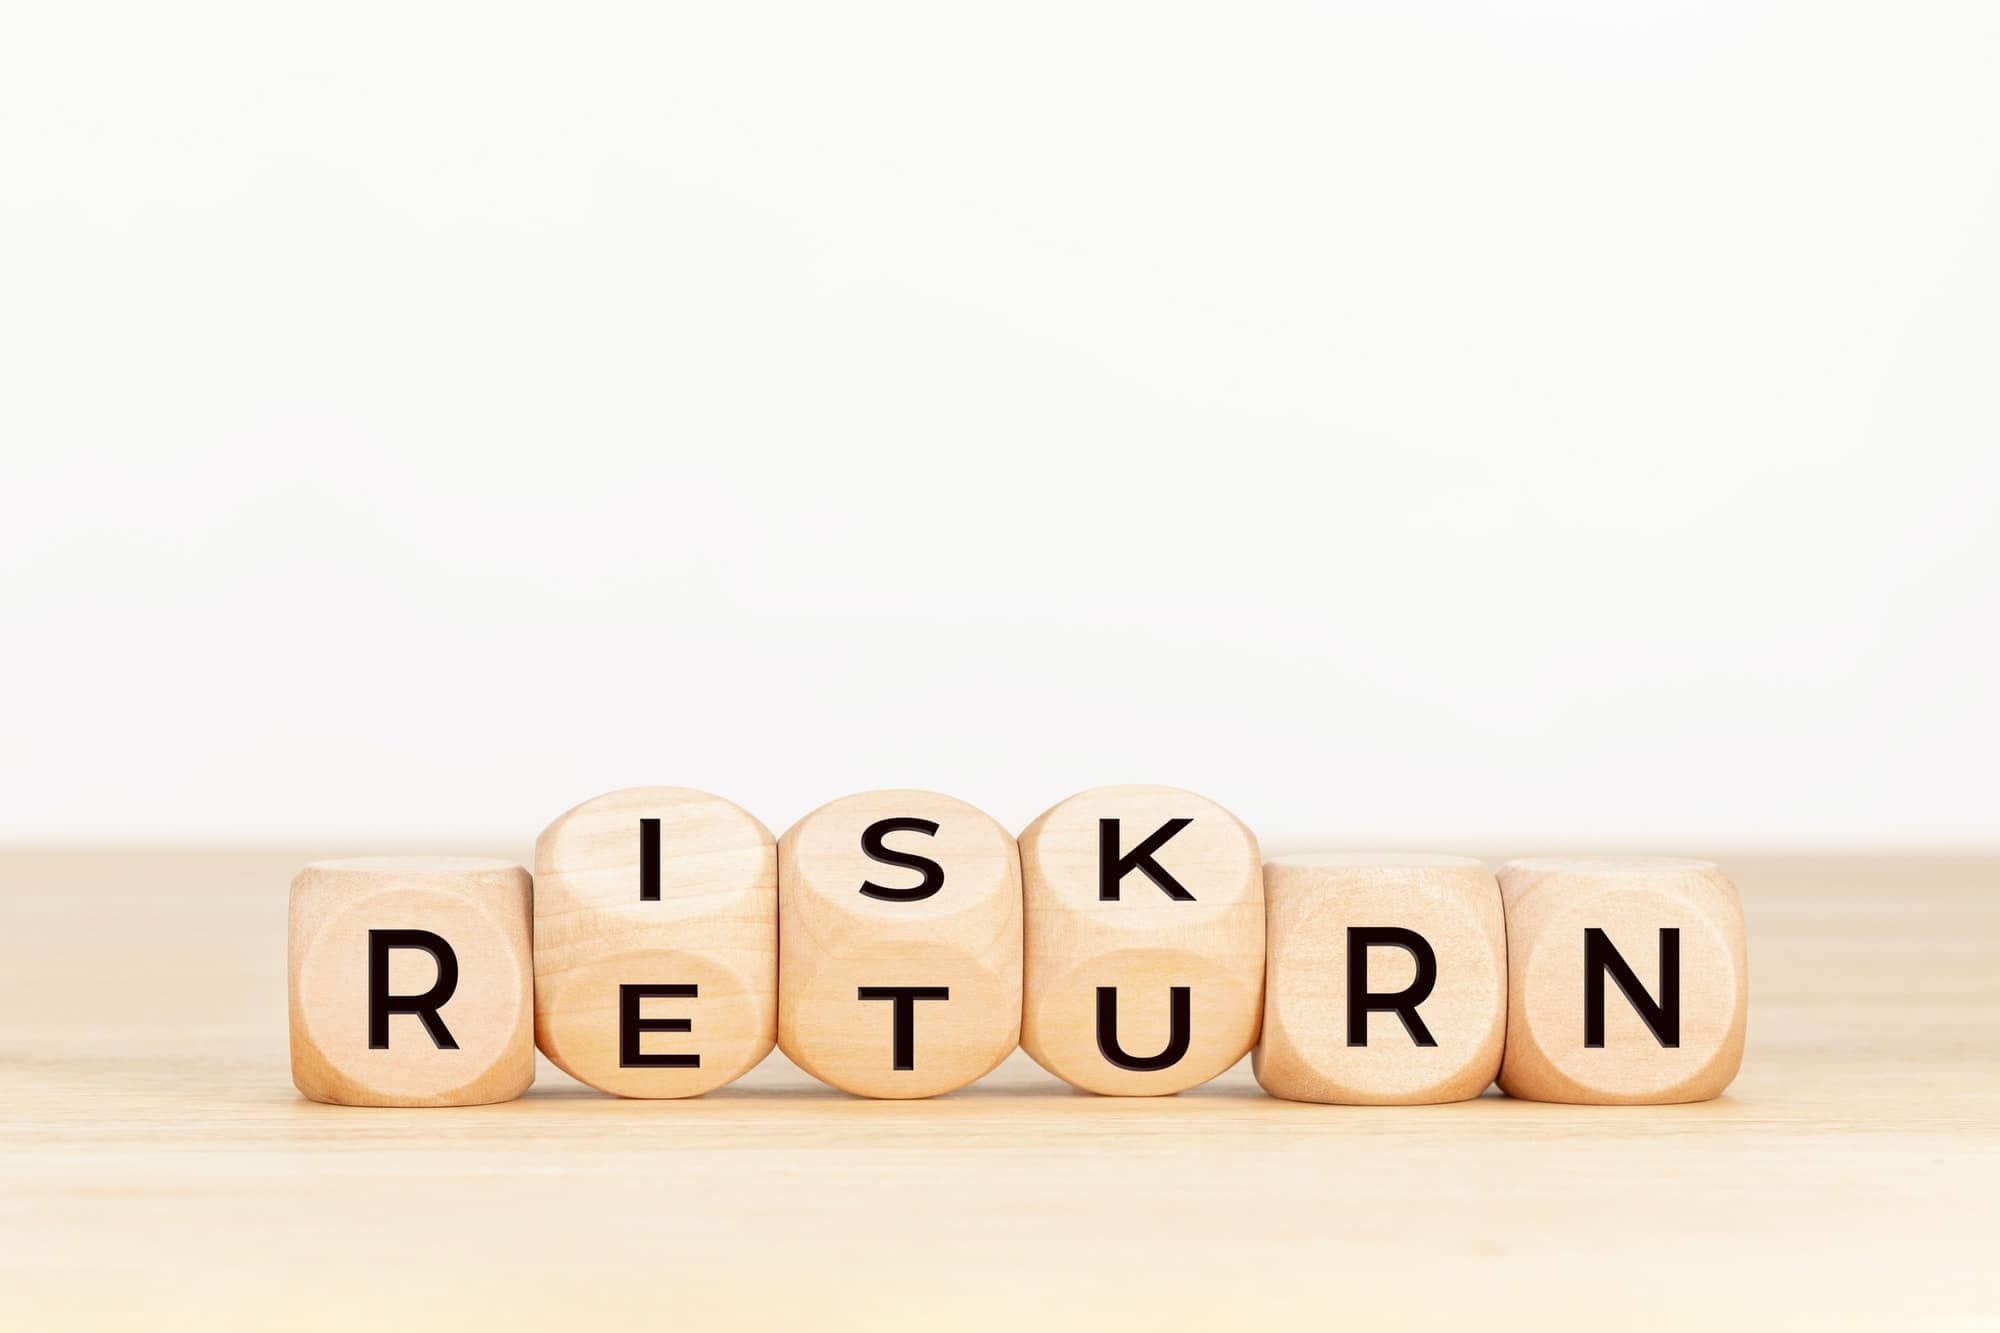 Risk Return concept